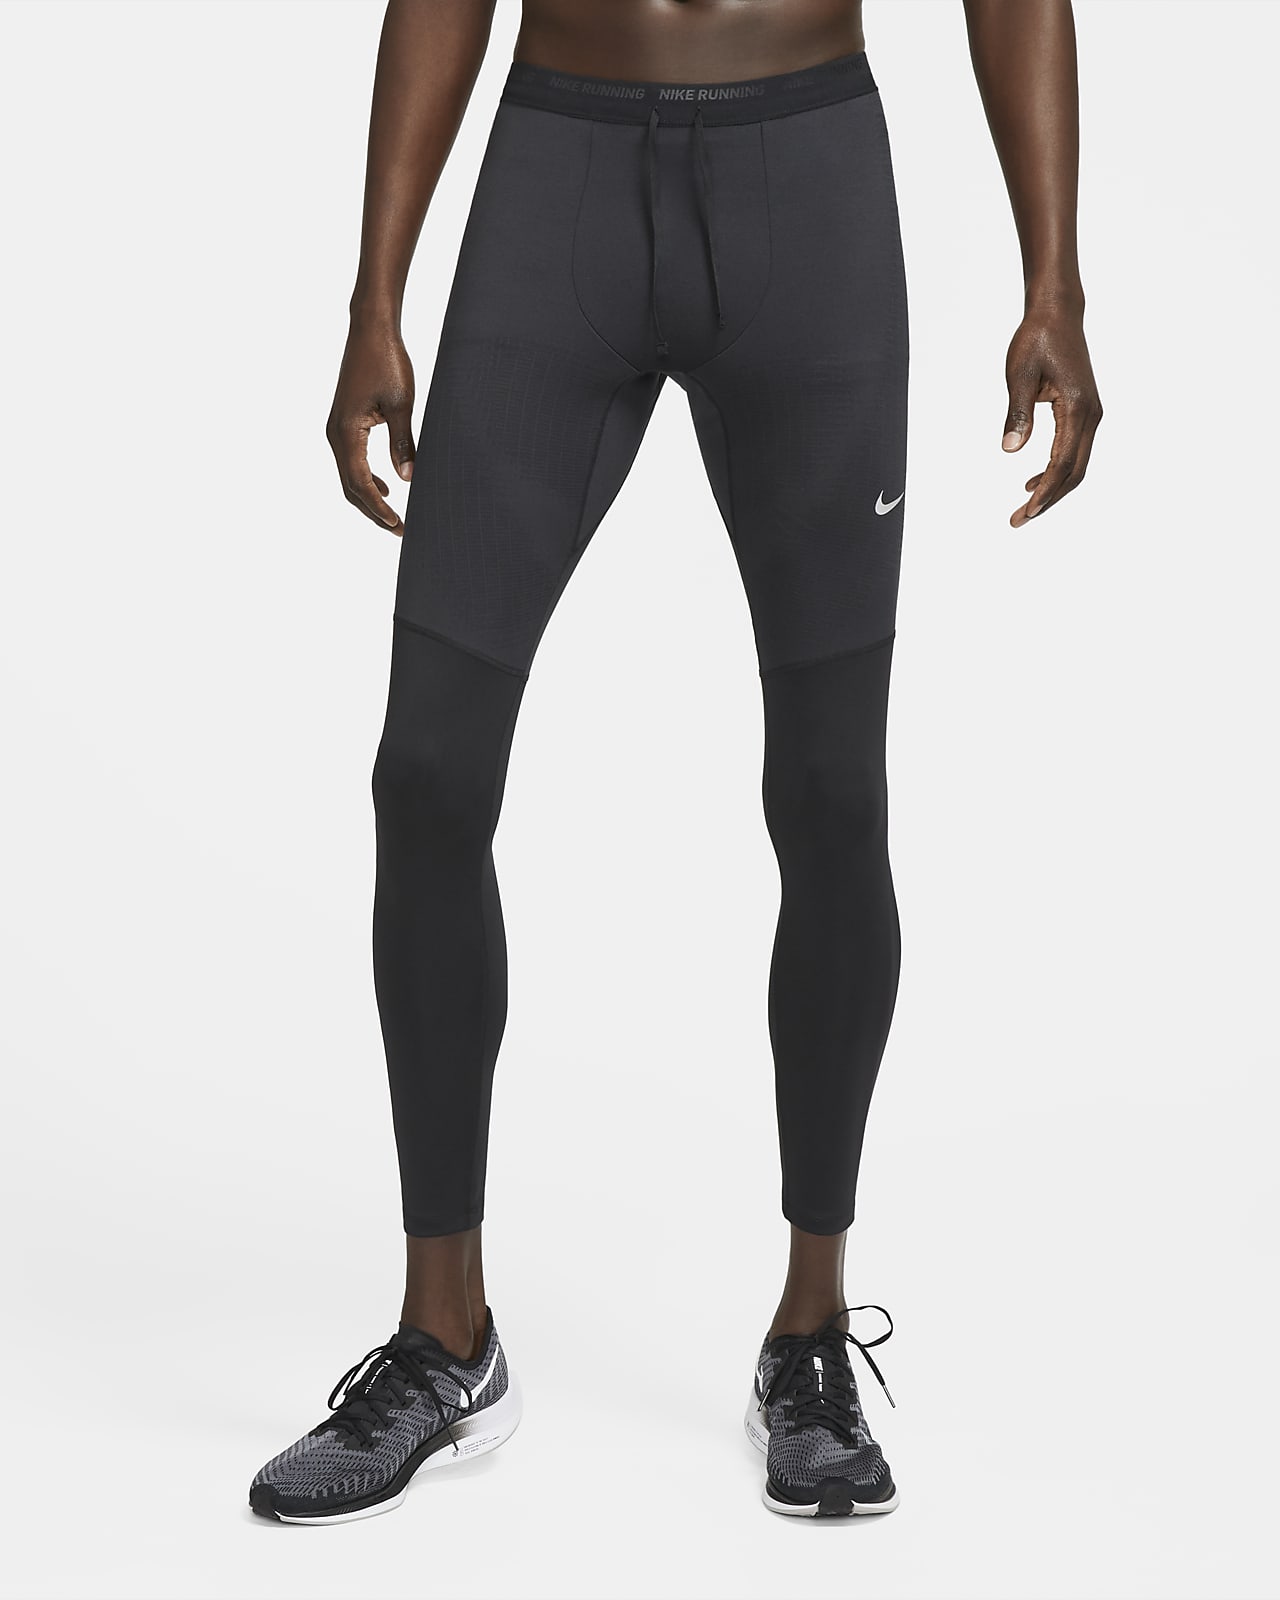 Nike Run Division Men's Running Pants (Black/Heather, Large) : Amazon.in:  Fashion